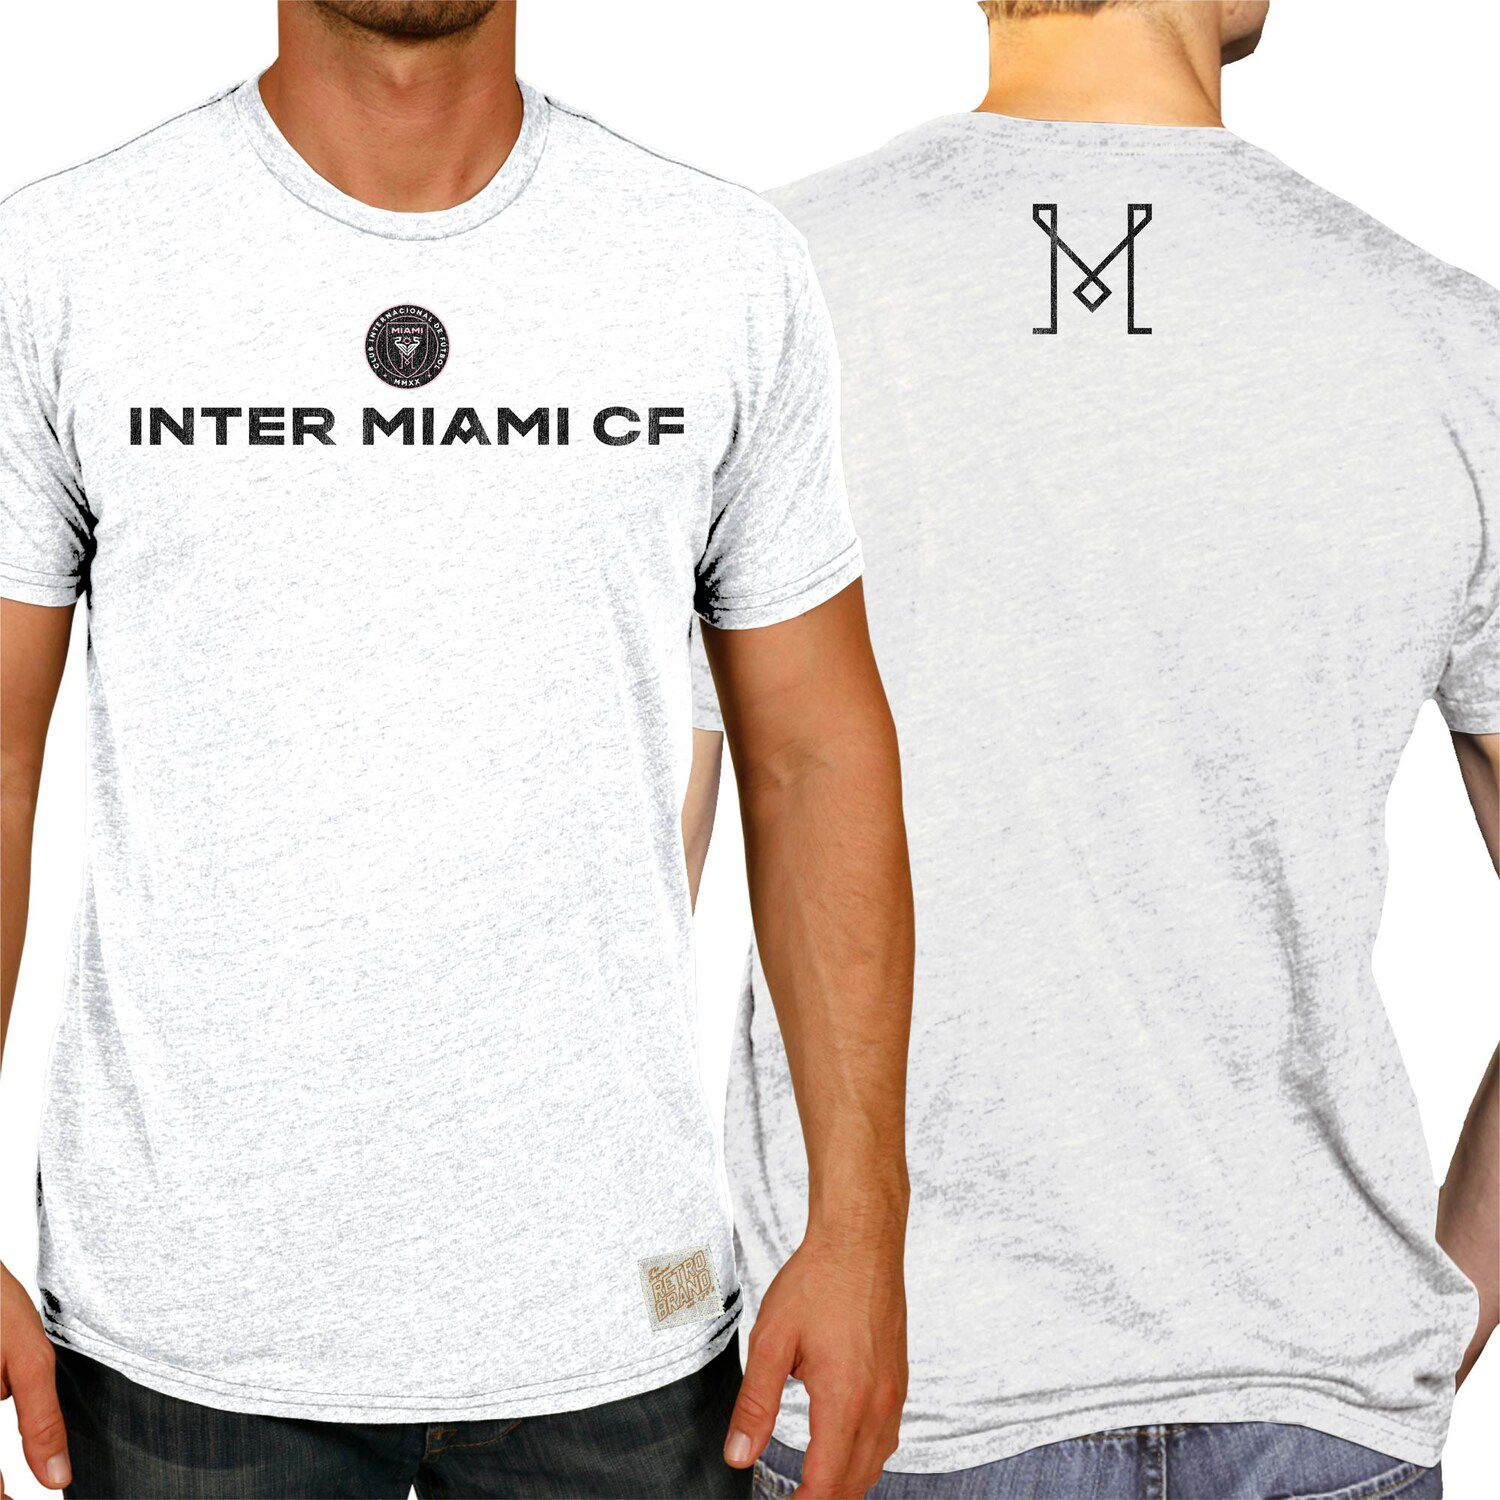 Image for Unbranded Men's Original Retro Brand White Inter Miami CF Tri-Blend T-Shirt at Kohl's.